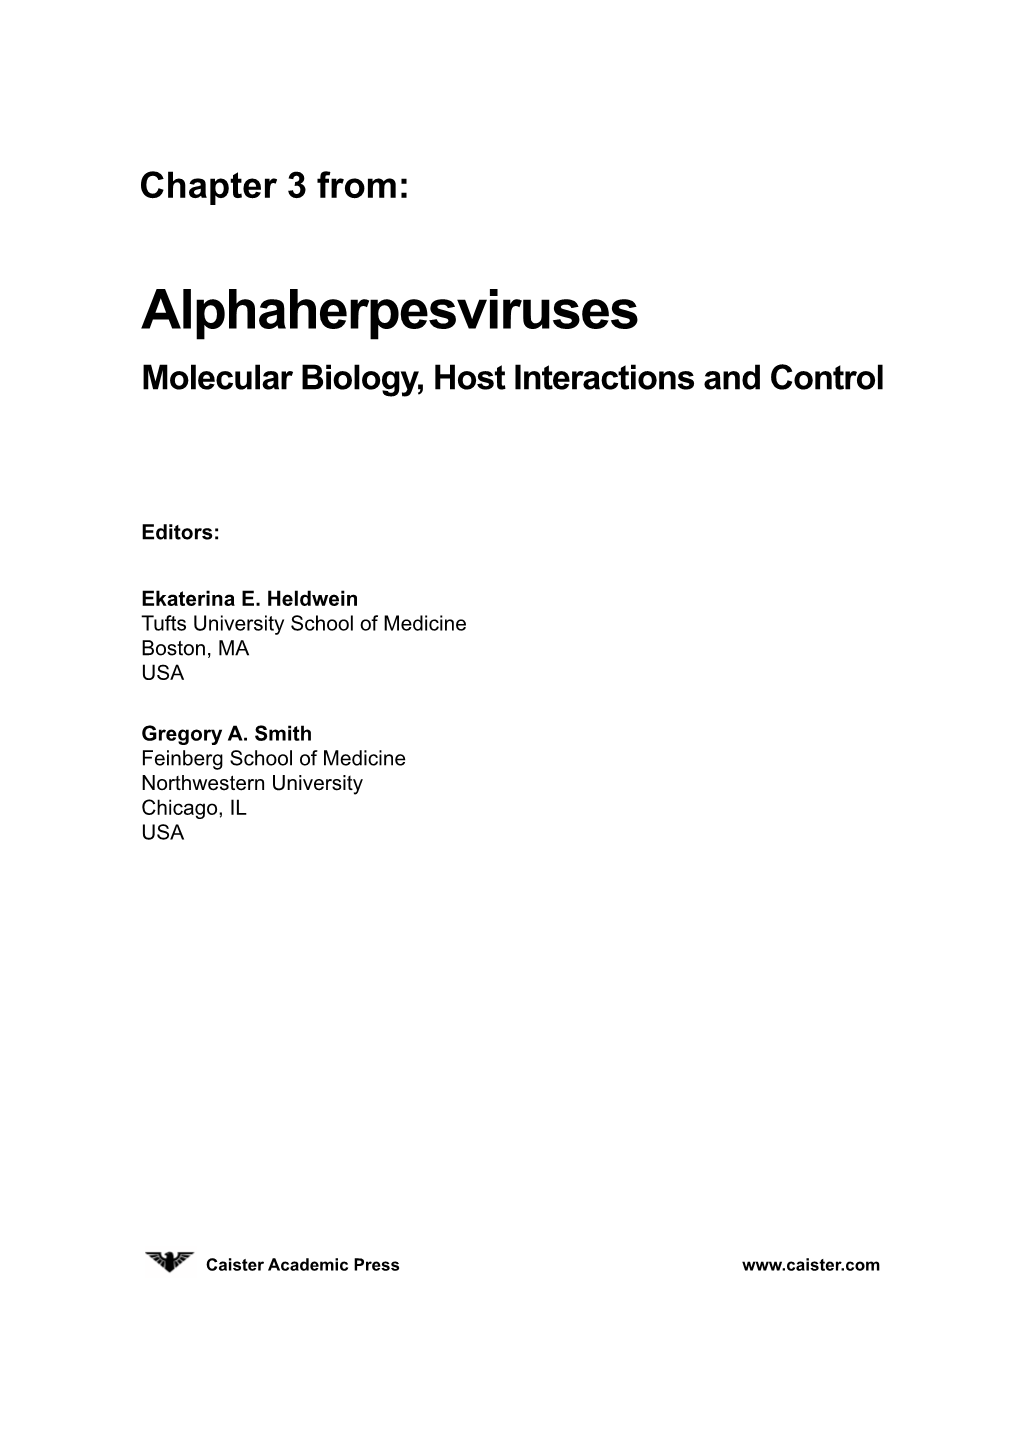 Alphaherpesviruses Molecular Biology, Host Interactions and Control